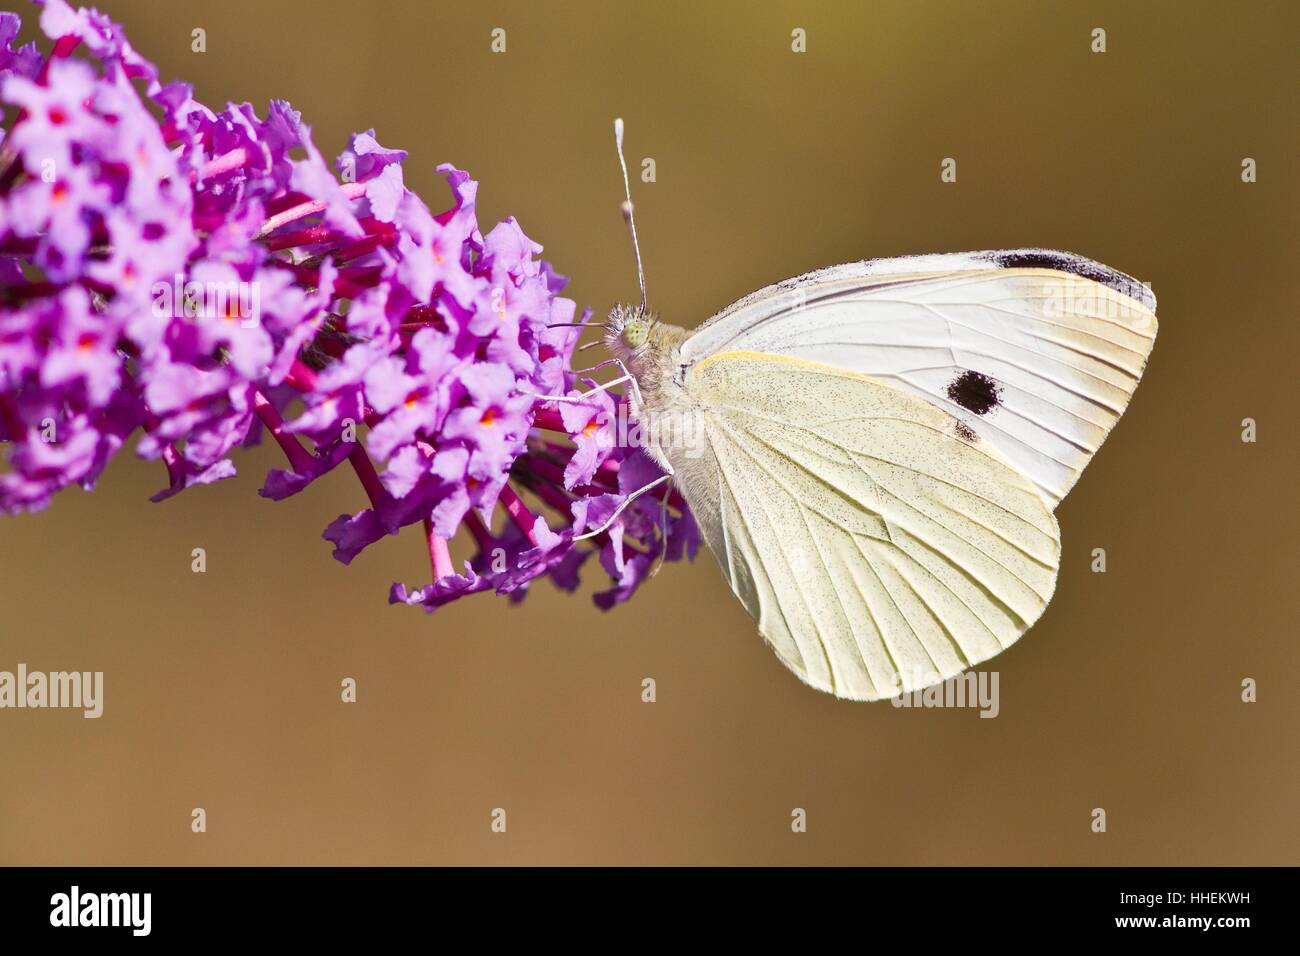 bloom, blossom, flourish, flourishing, bigger, types, cabbage white butterfly, Stock Photo